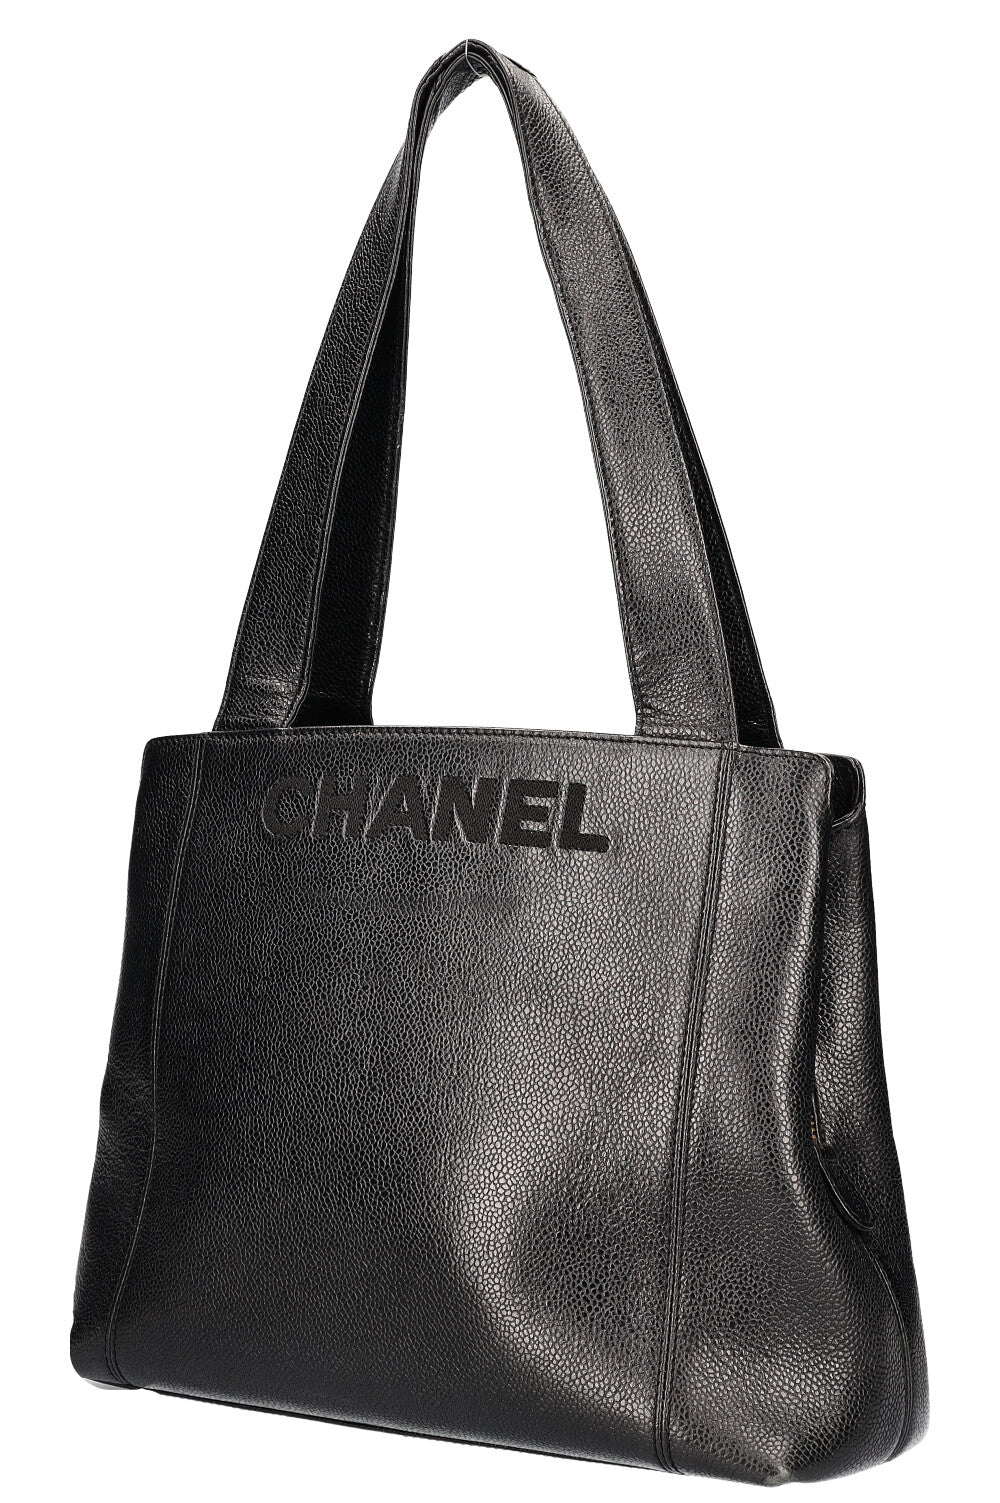 CHANEL Shopping Bag Black